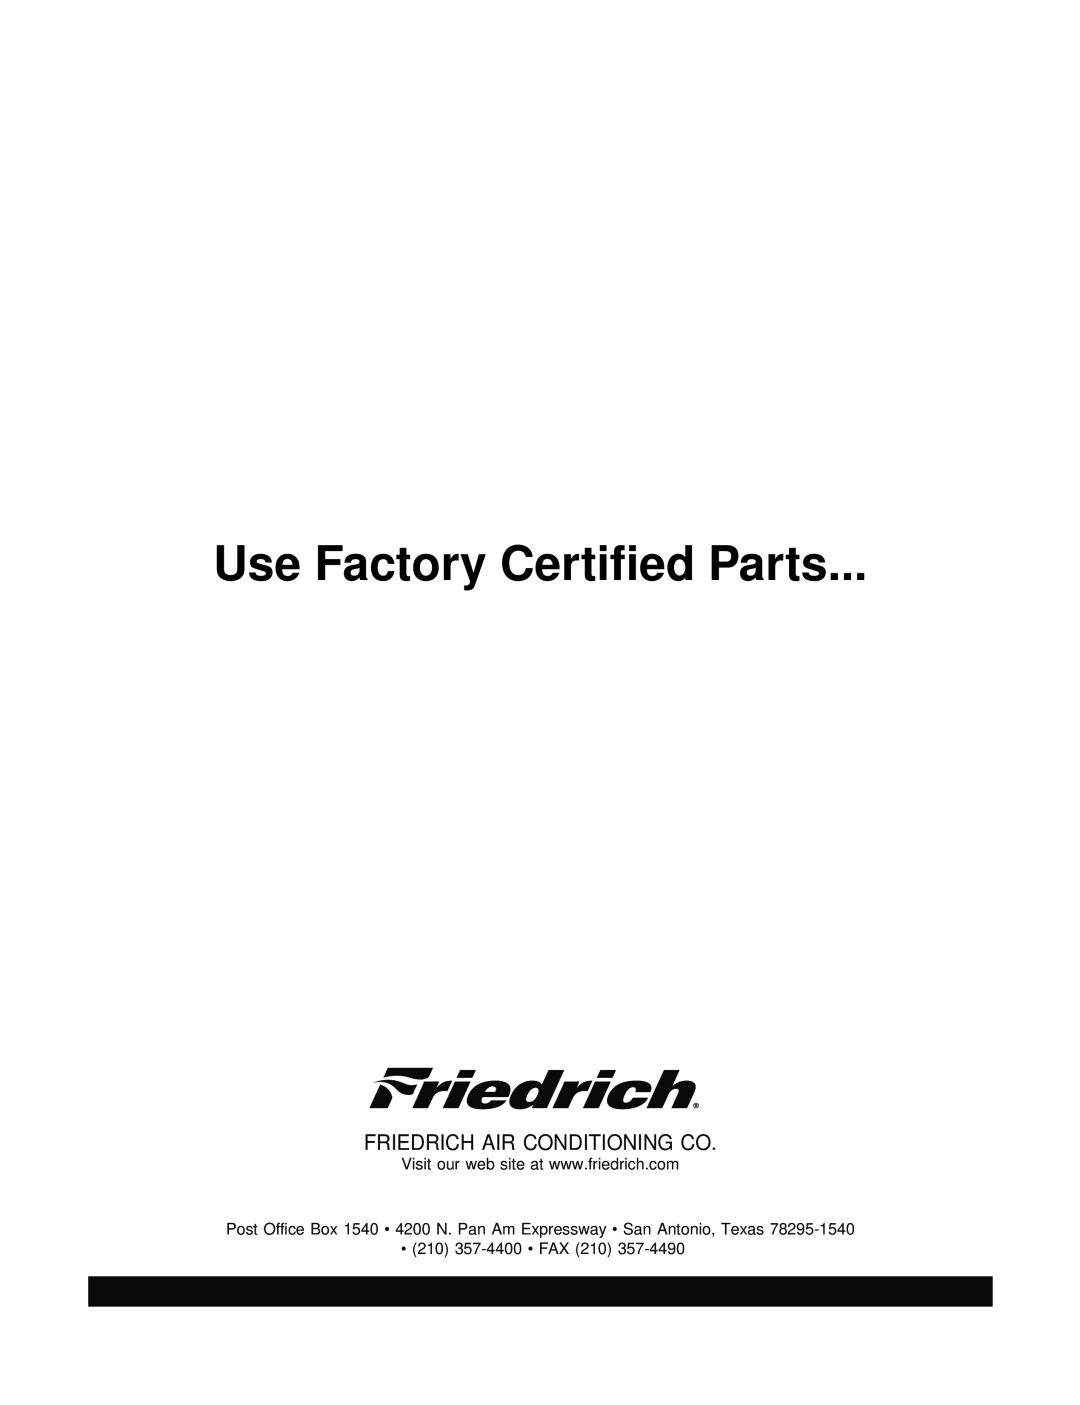 Friedrich CP08A10, ZQ08B10, ZQ10B10, CP10A10 Friedrich Air Conditioning Co, Use Factory Certified Parts, 210 357-4400 FAX 